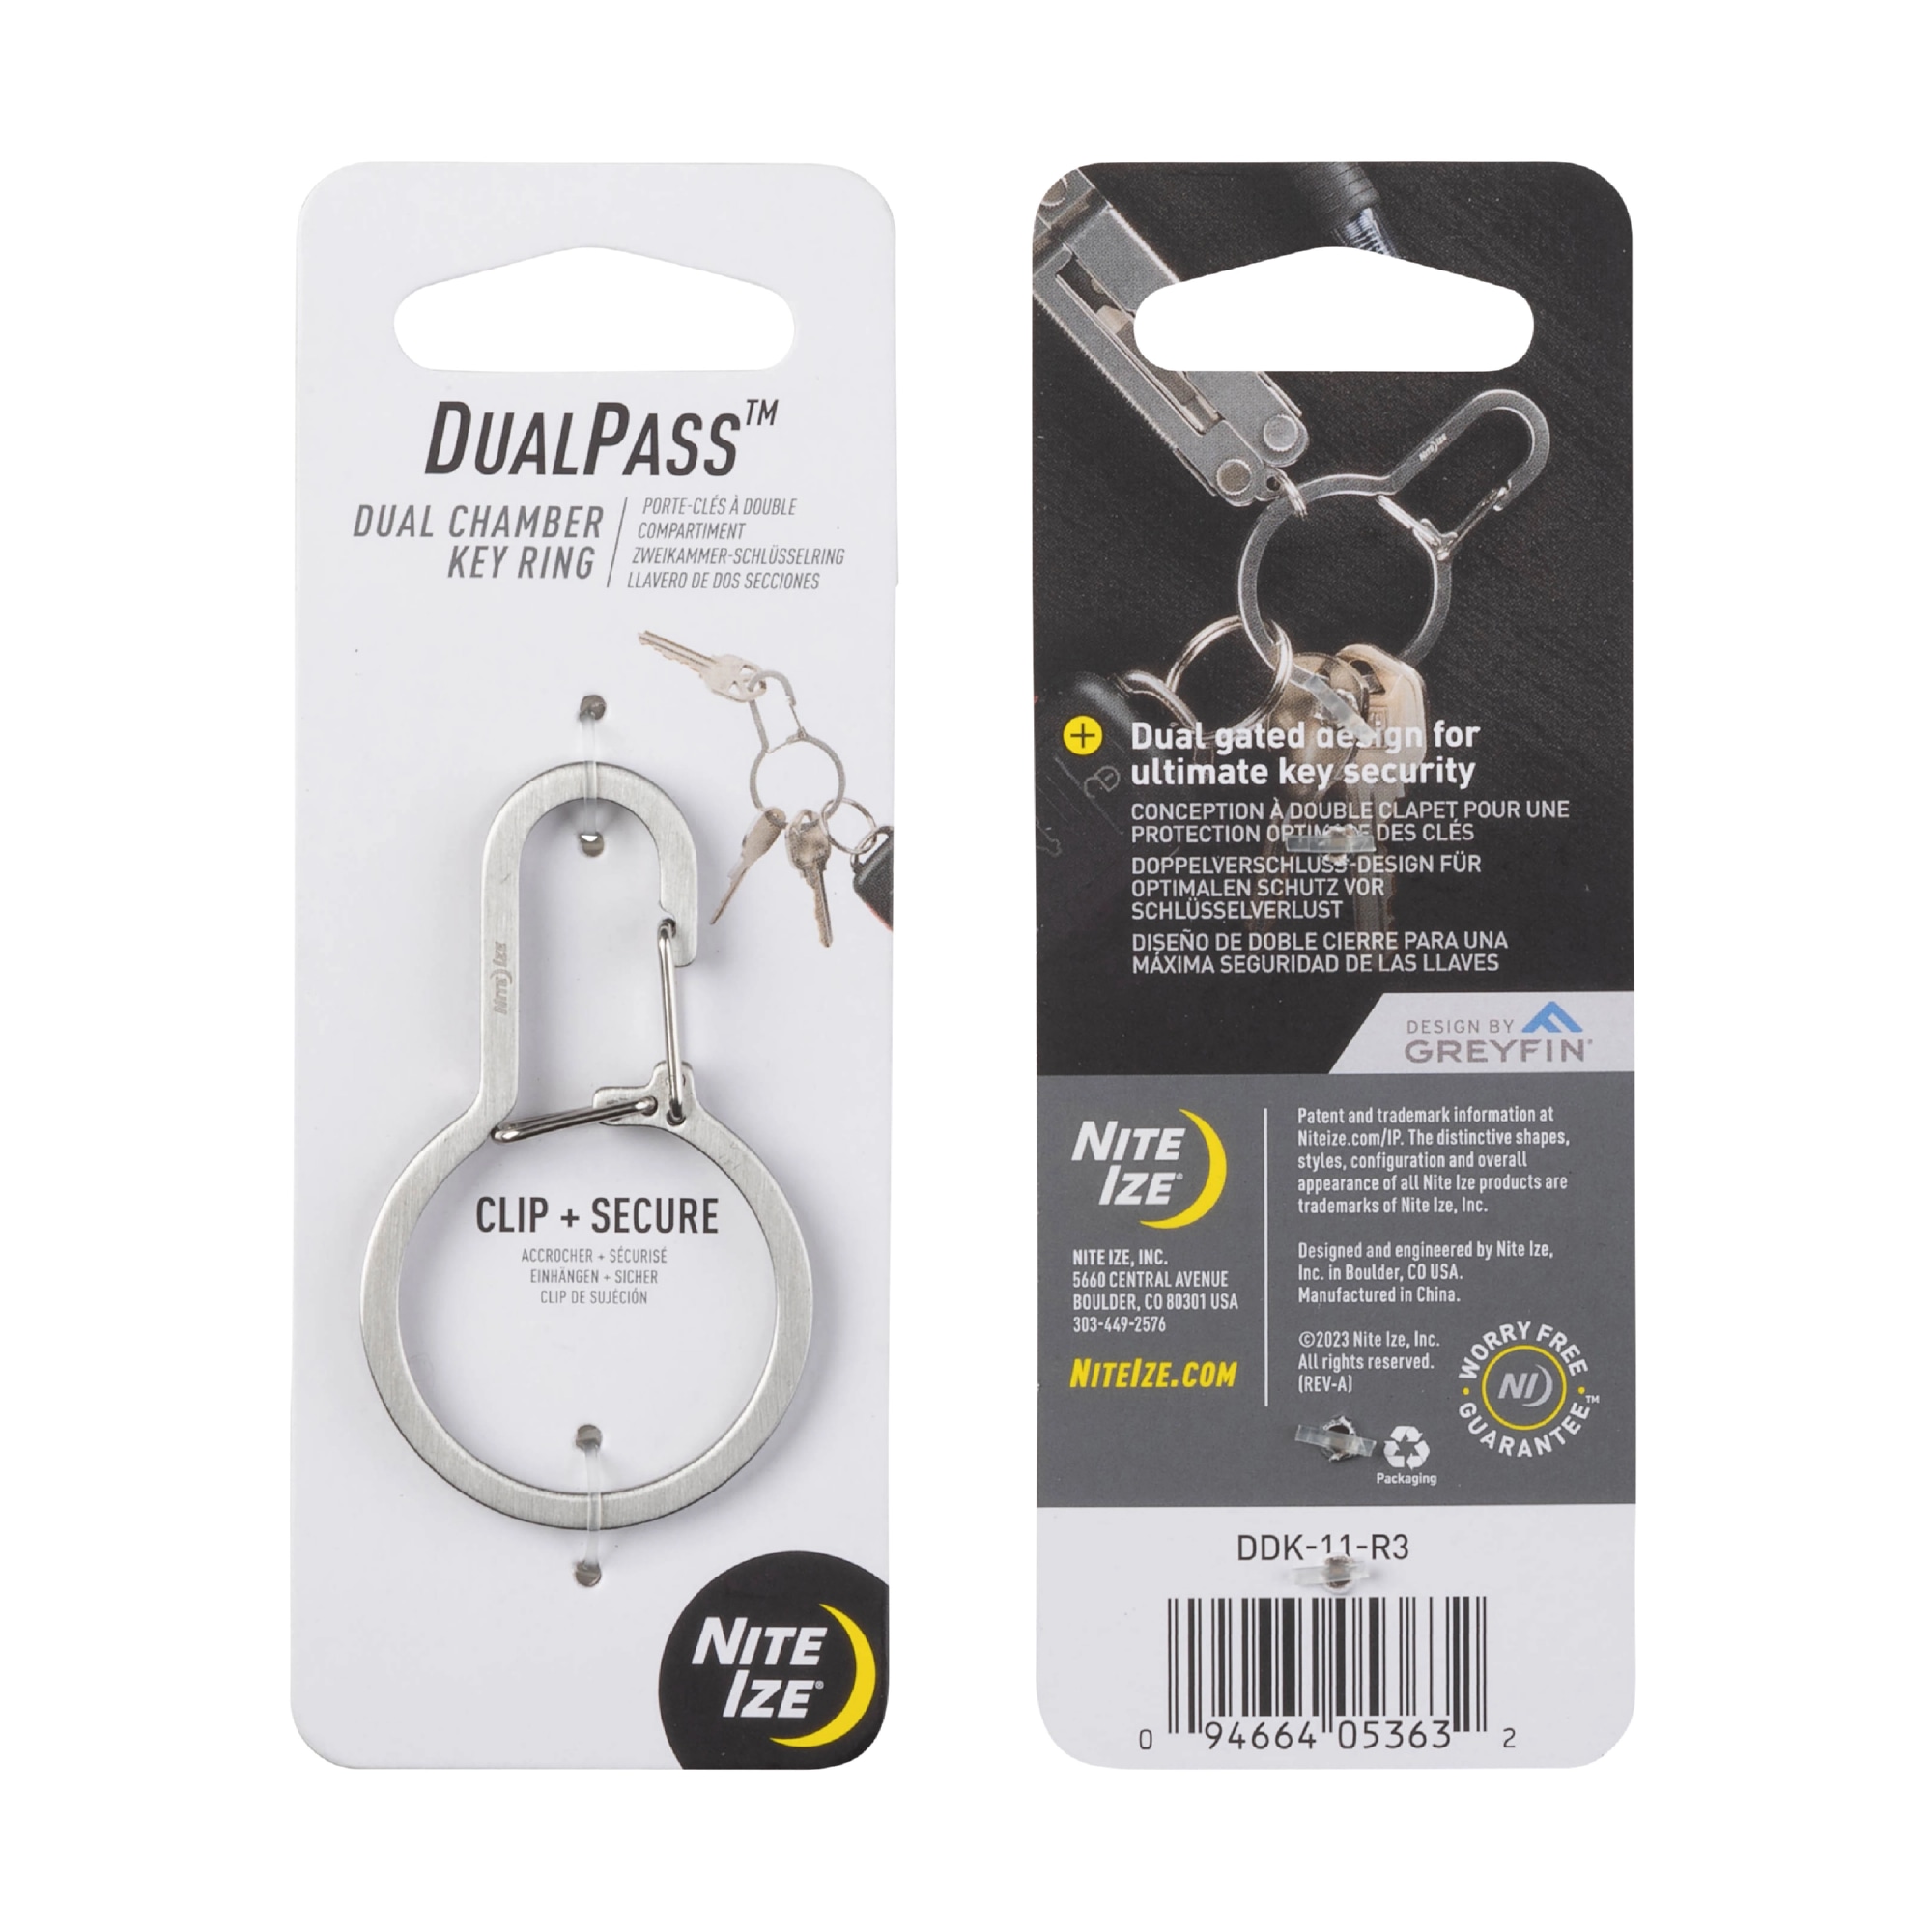 DualPass Dual Chamber Key Ring